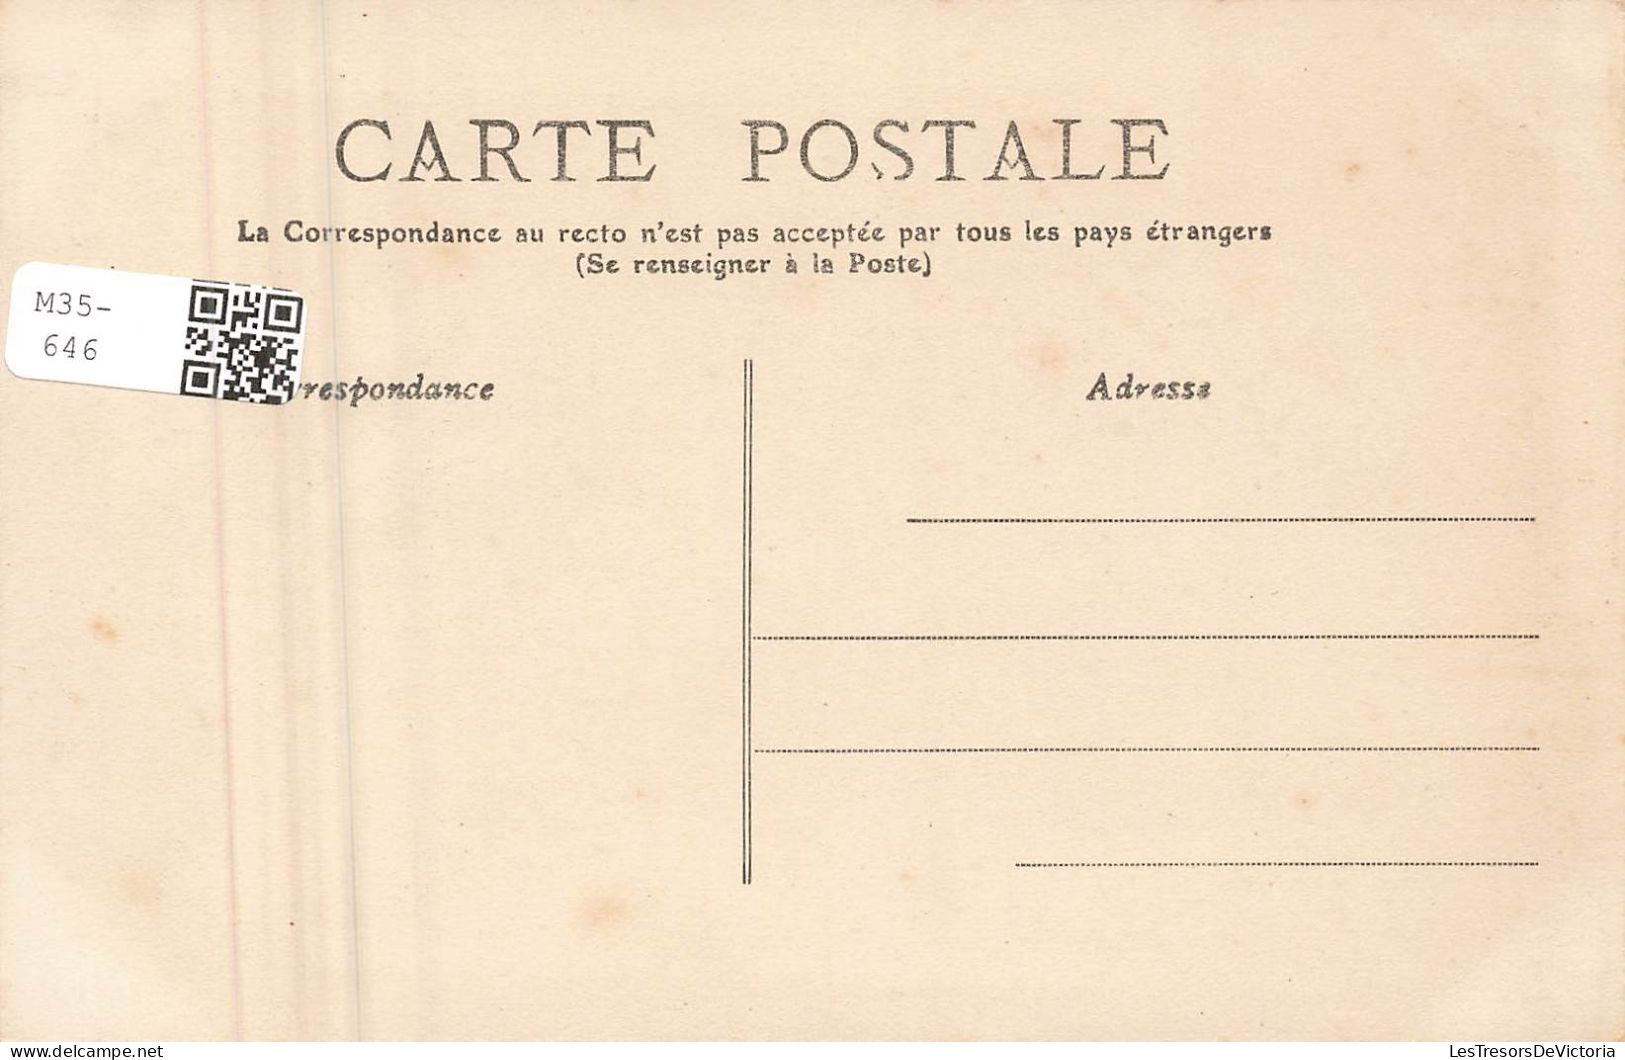 FRANCE - Palavas - Le Canal - Carte Postale Ancienne - Palavas Les Flots